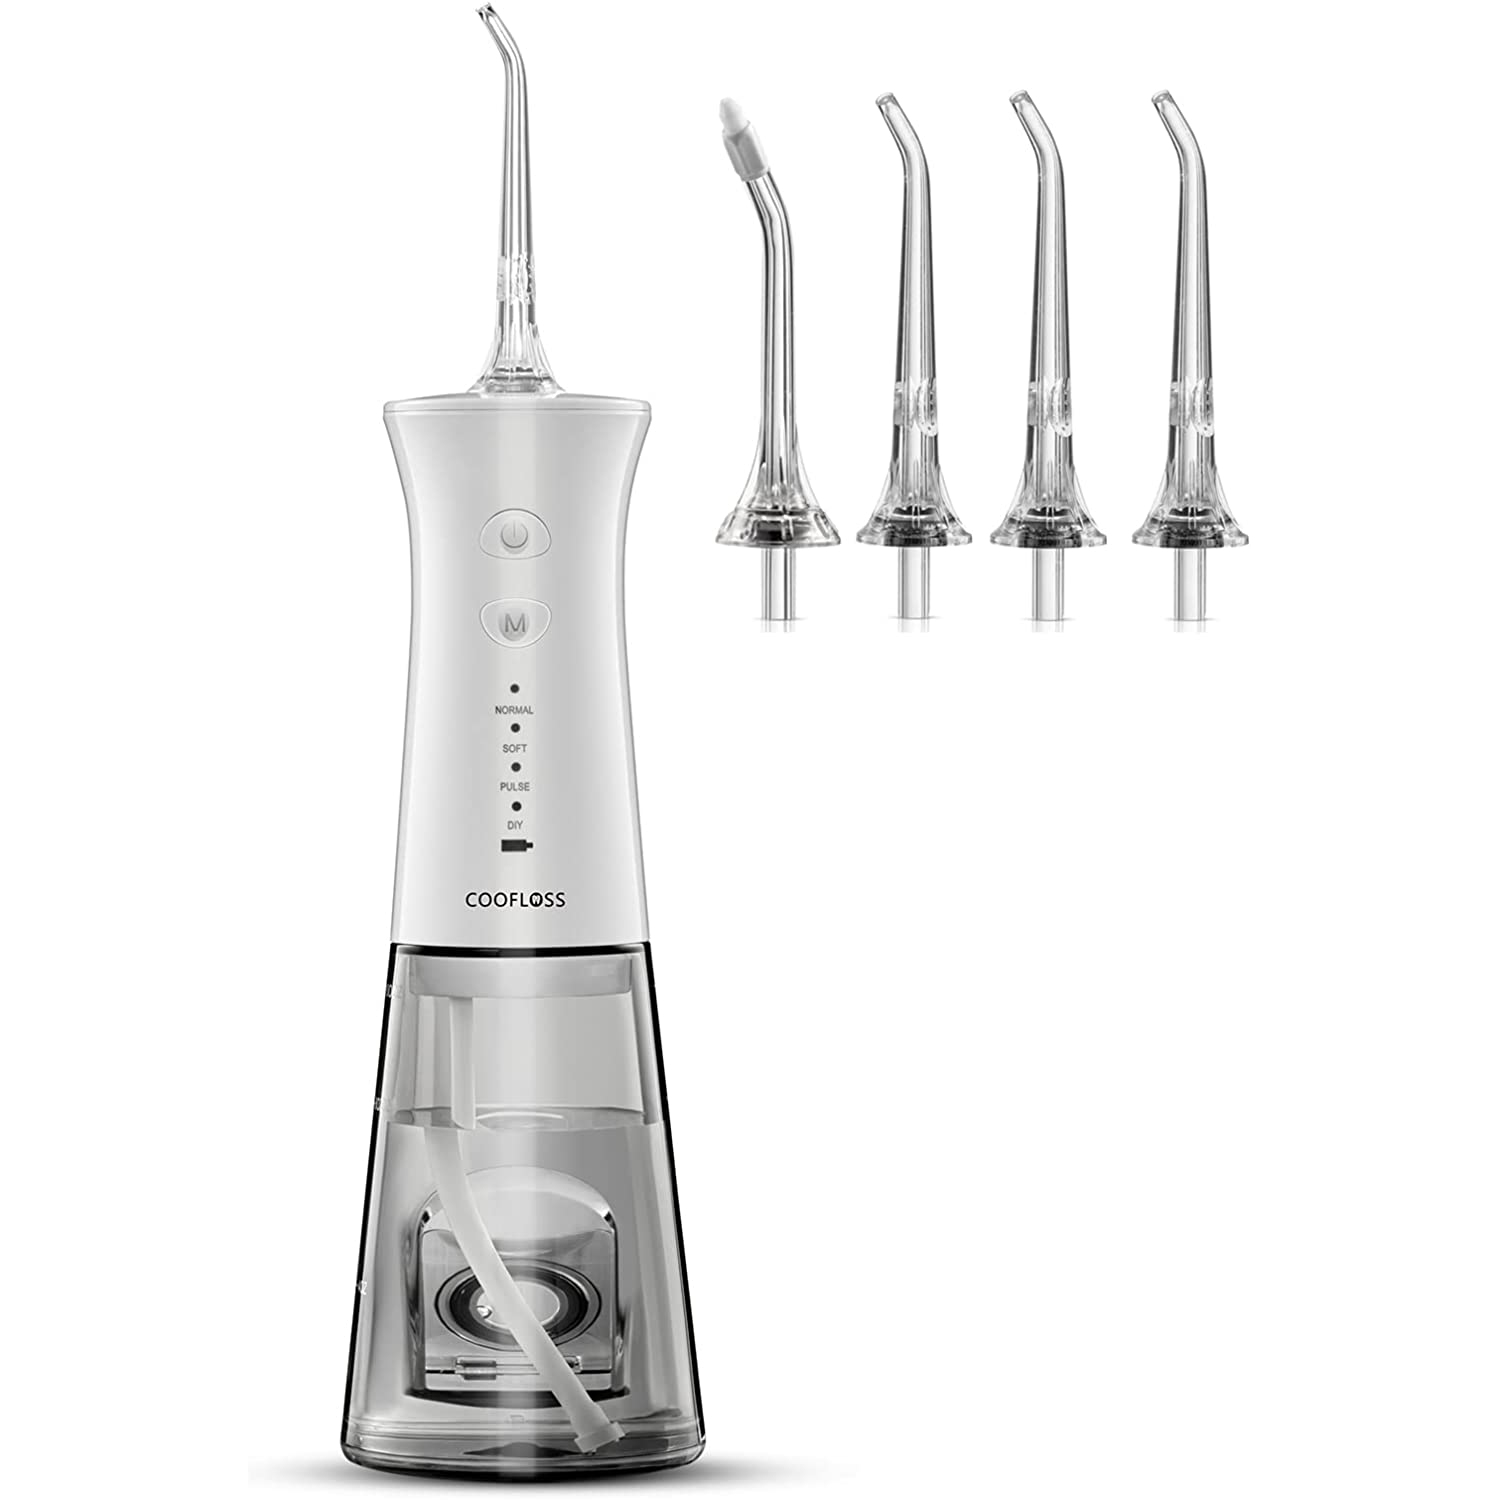 Coofloss Cordless Water Flosser for Teeth, Portable Dental Pick Oral Irrigator, Gum Brace Power Cleaner